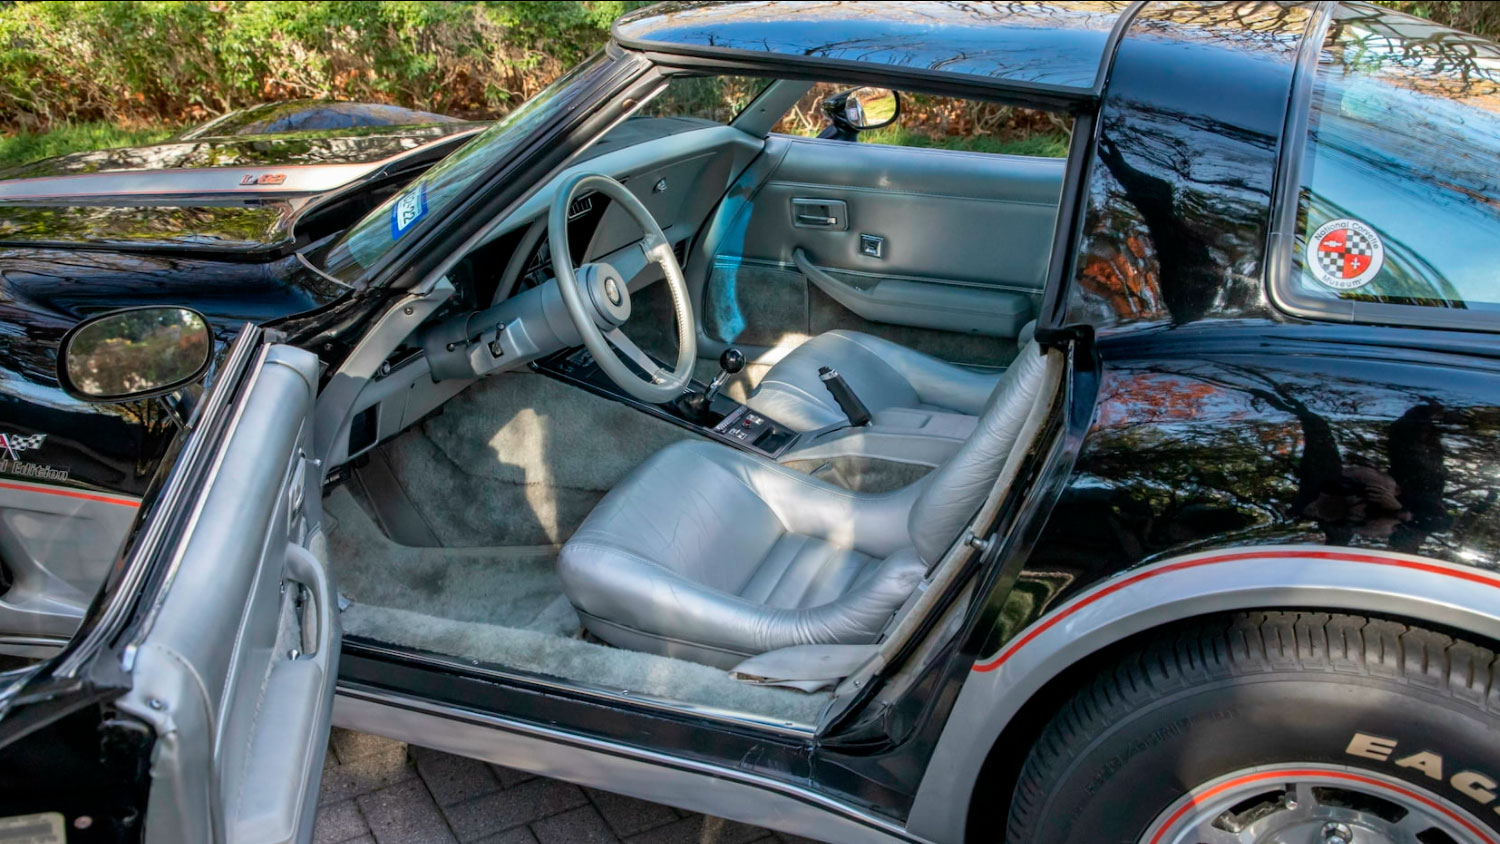 https://gmauthority.com/blog/wp-content/uploads/2022/02/1978-Chevrolet-Corvette-Pace-Car-interior-001-Mecum-Auctions-Black-and-Silver-seats-console-shifter-steering-wheel-dash-door-panel.jpg